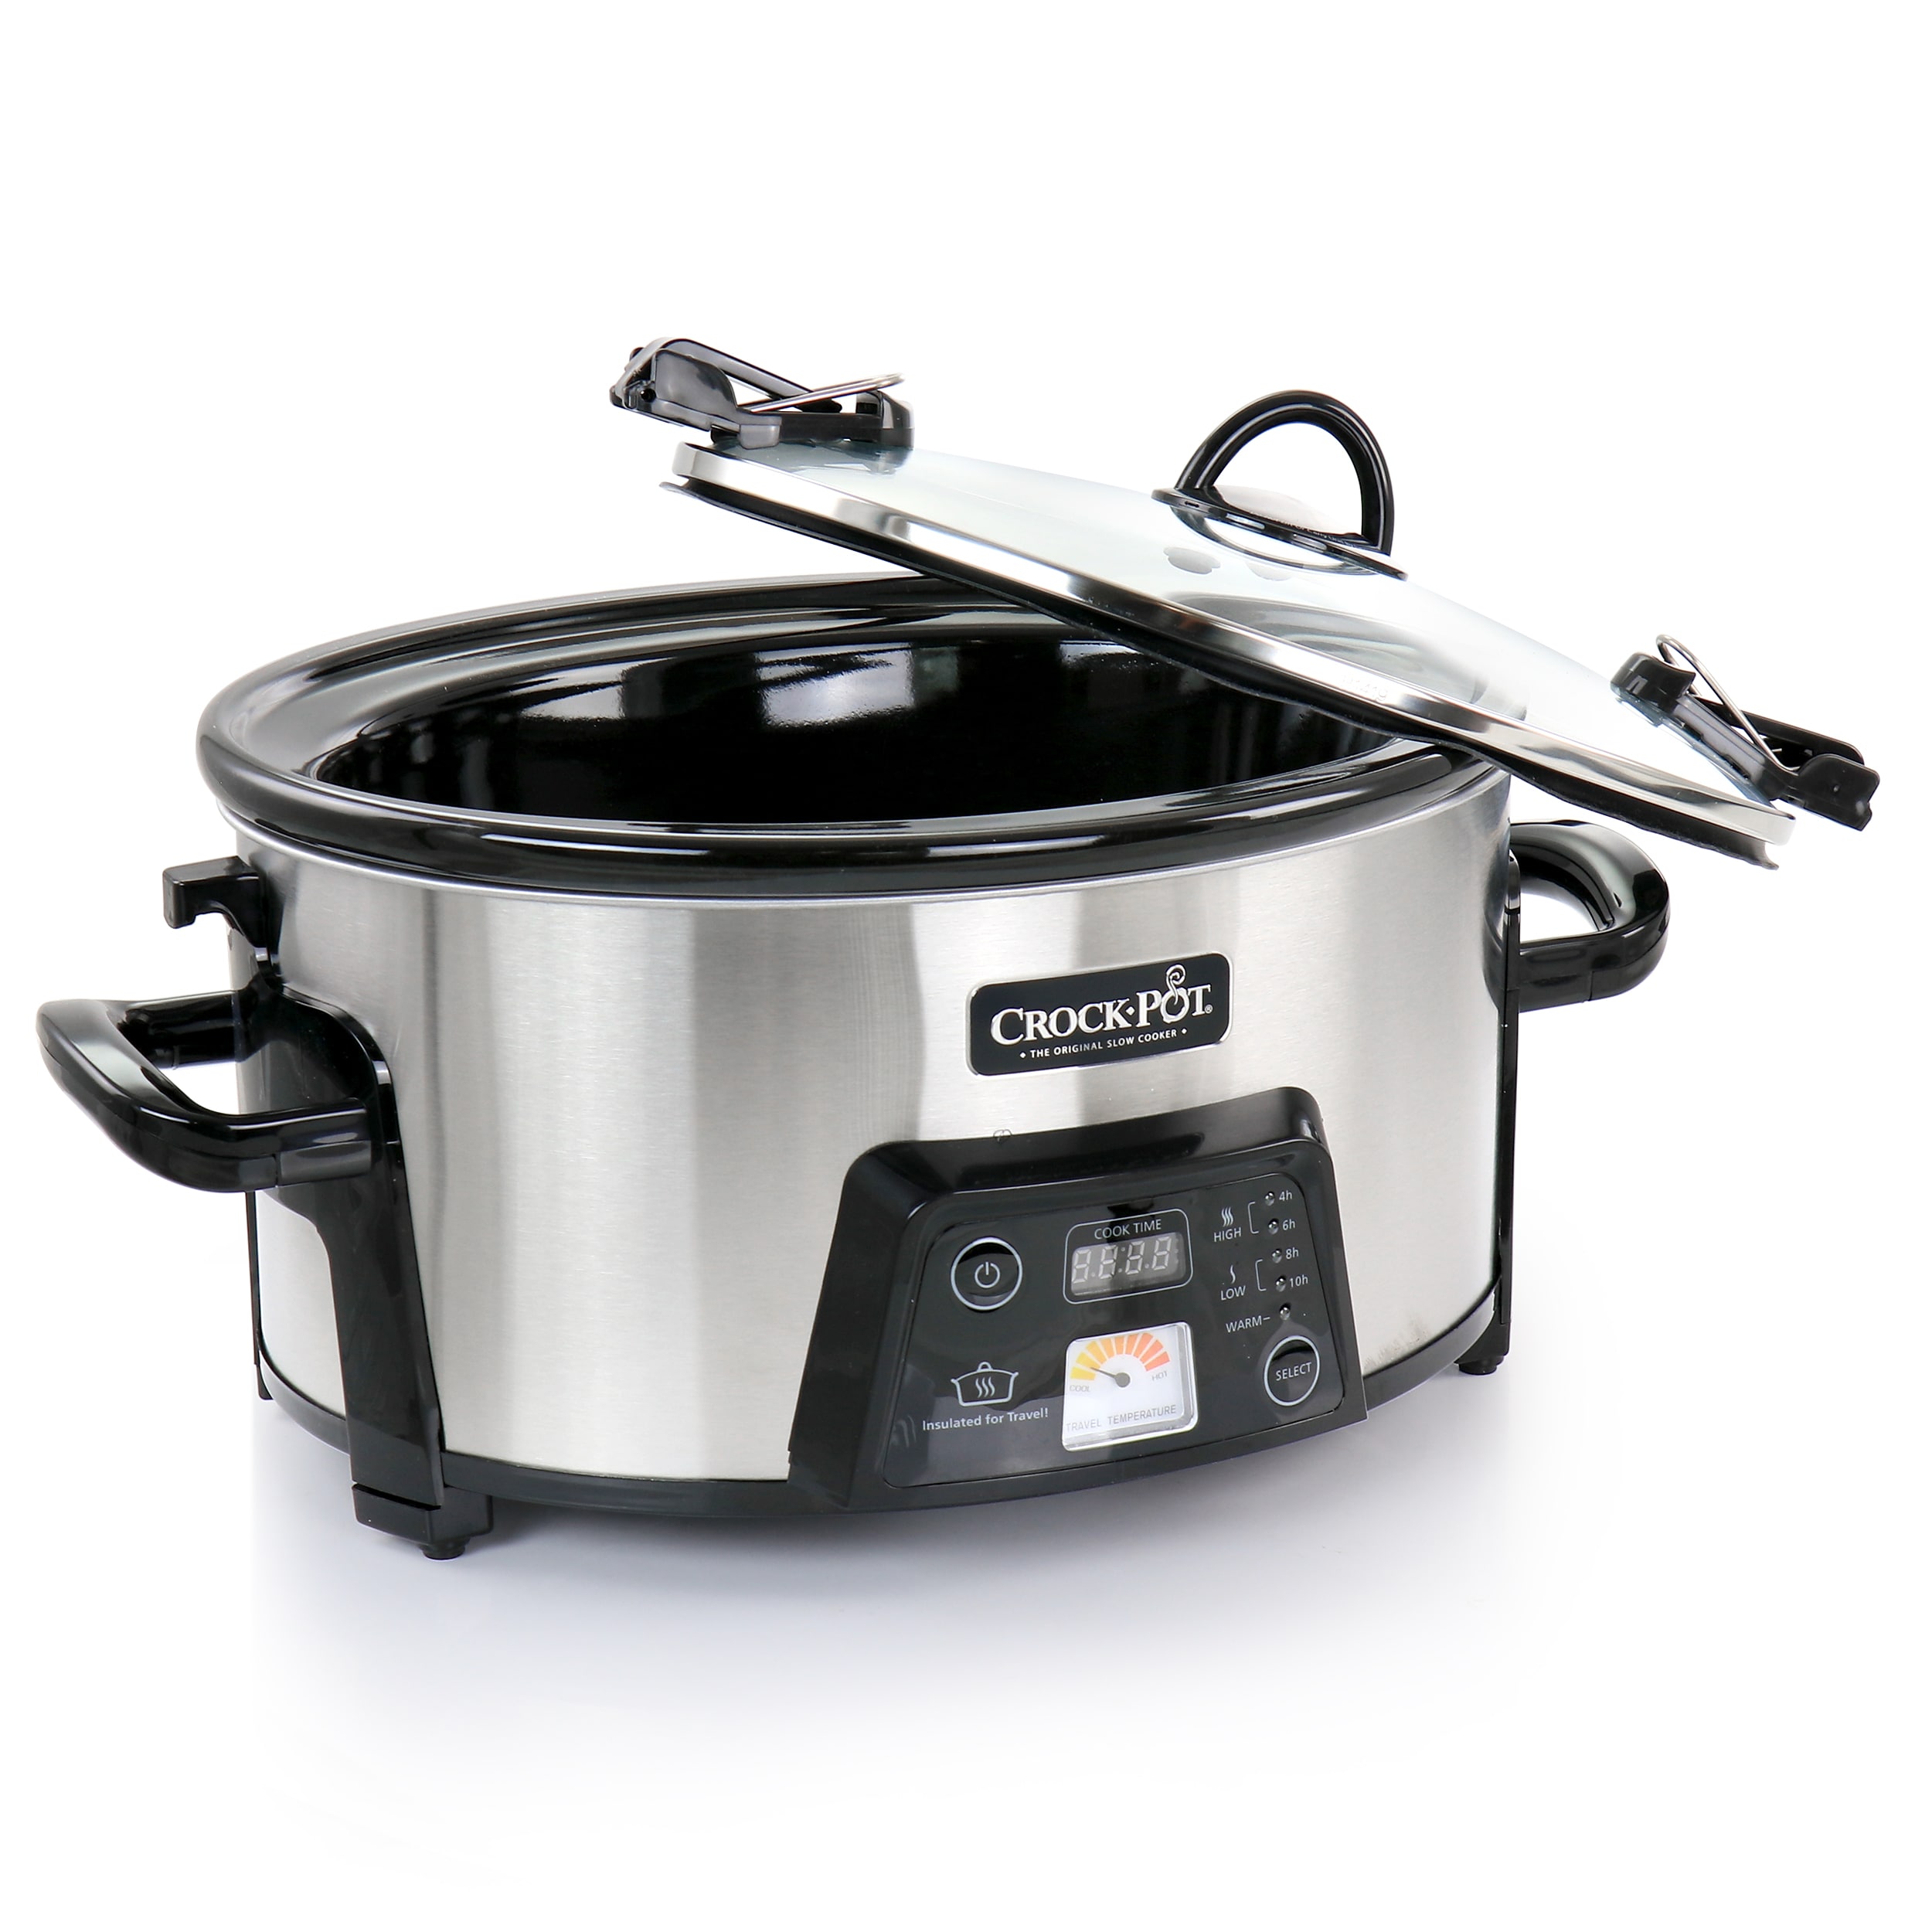 Crock-pot 6 Quart Programmable Cook & Carry Oval Slow Cooker